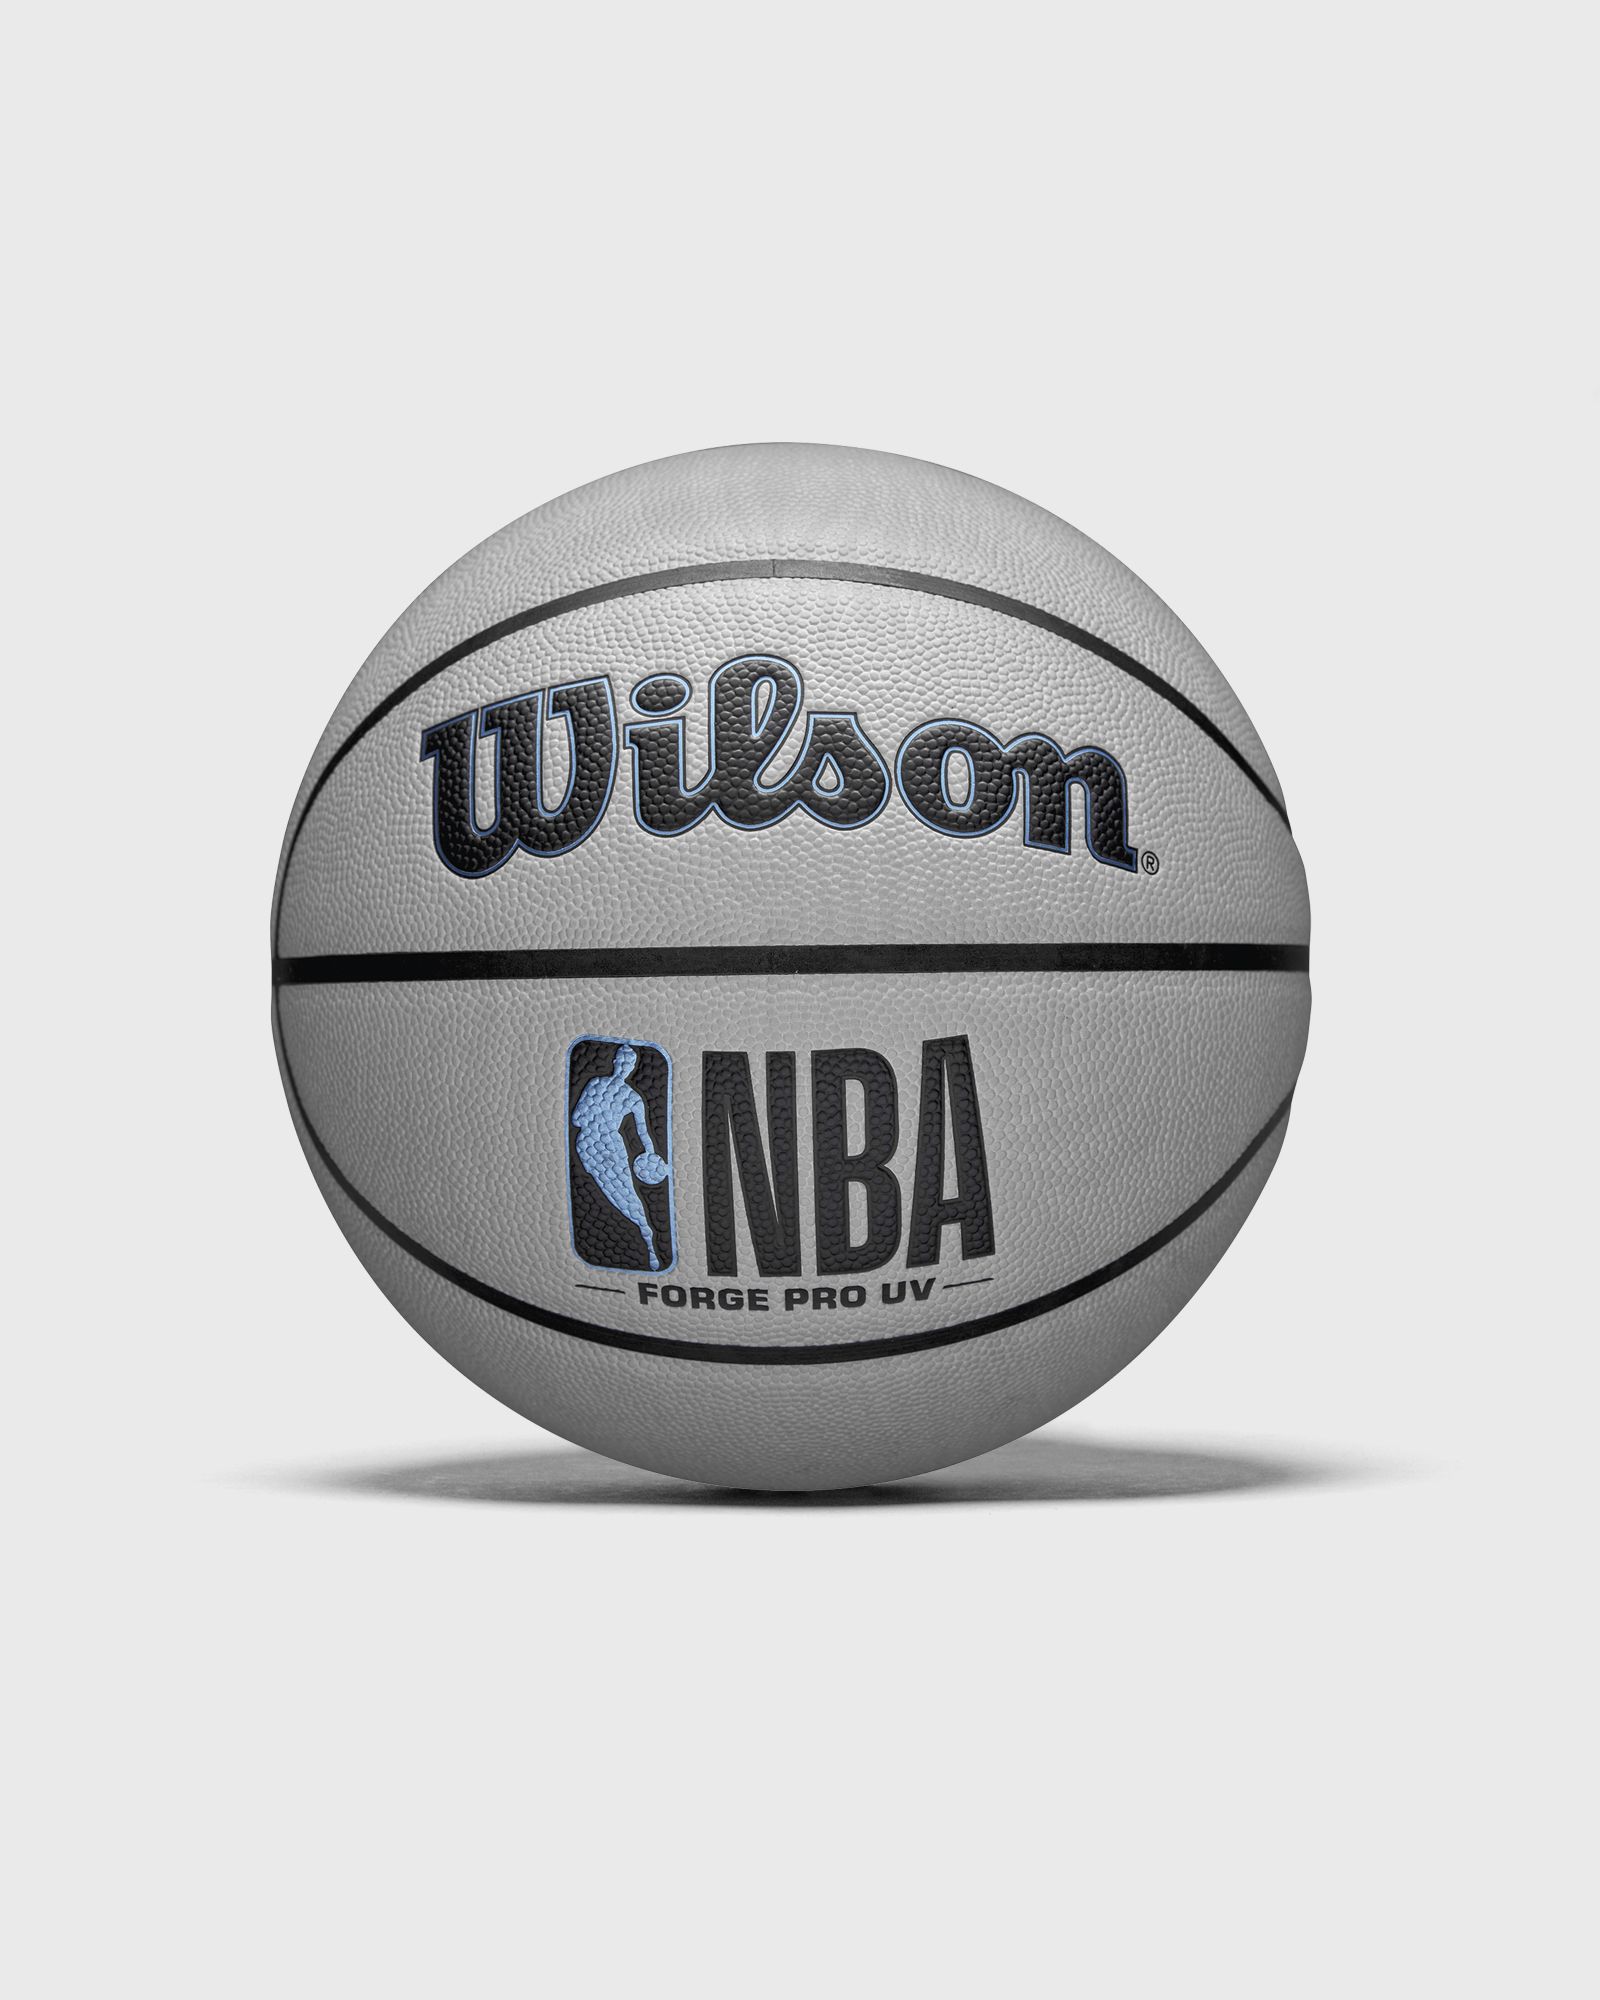 WILSON - nba forge pro uv basketball size 7 men sports equipment grey in größe:one size